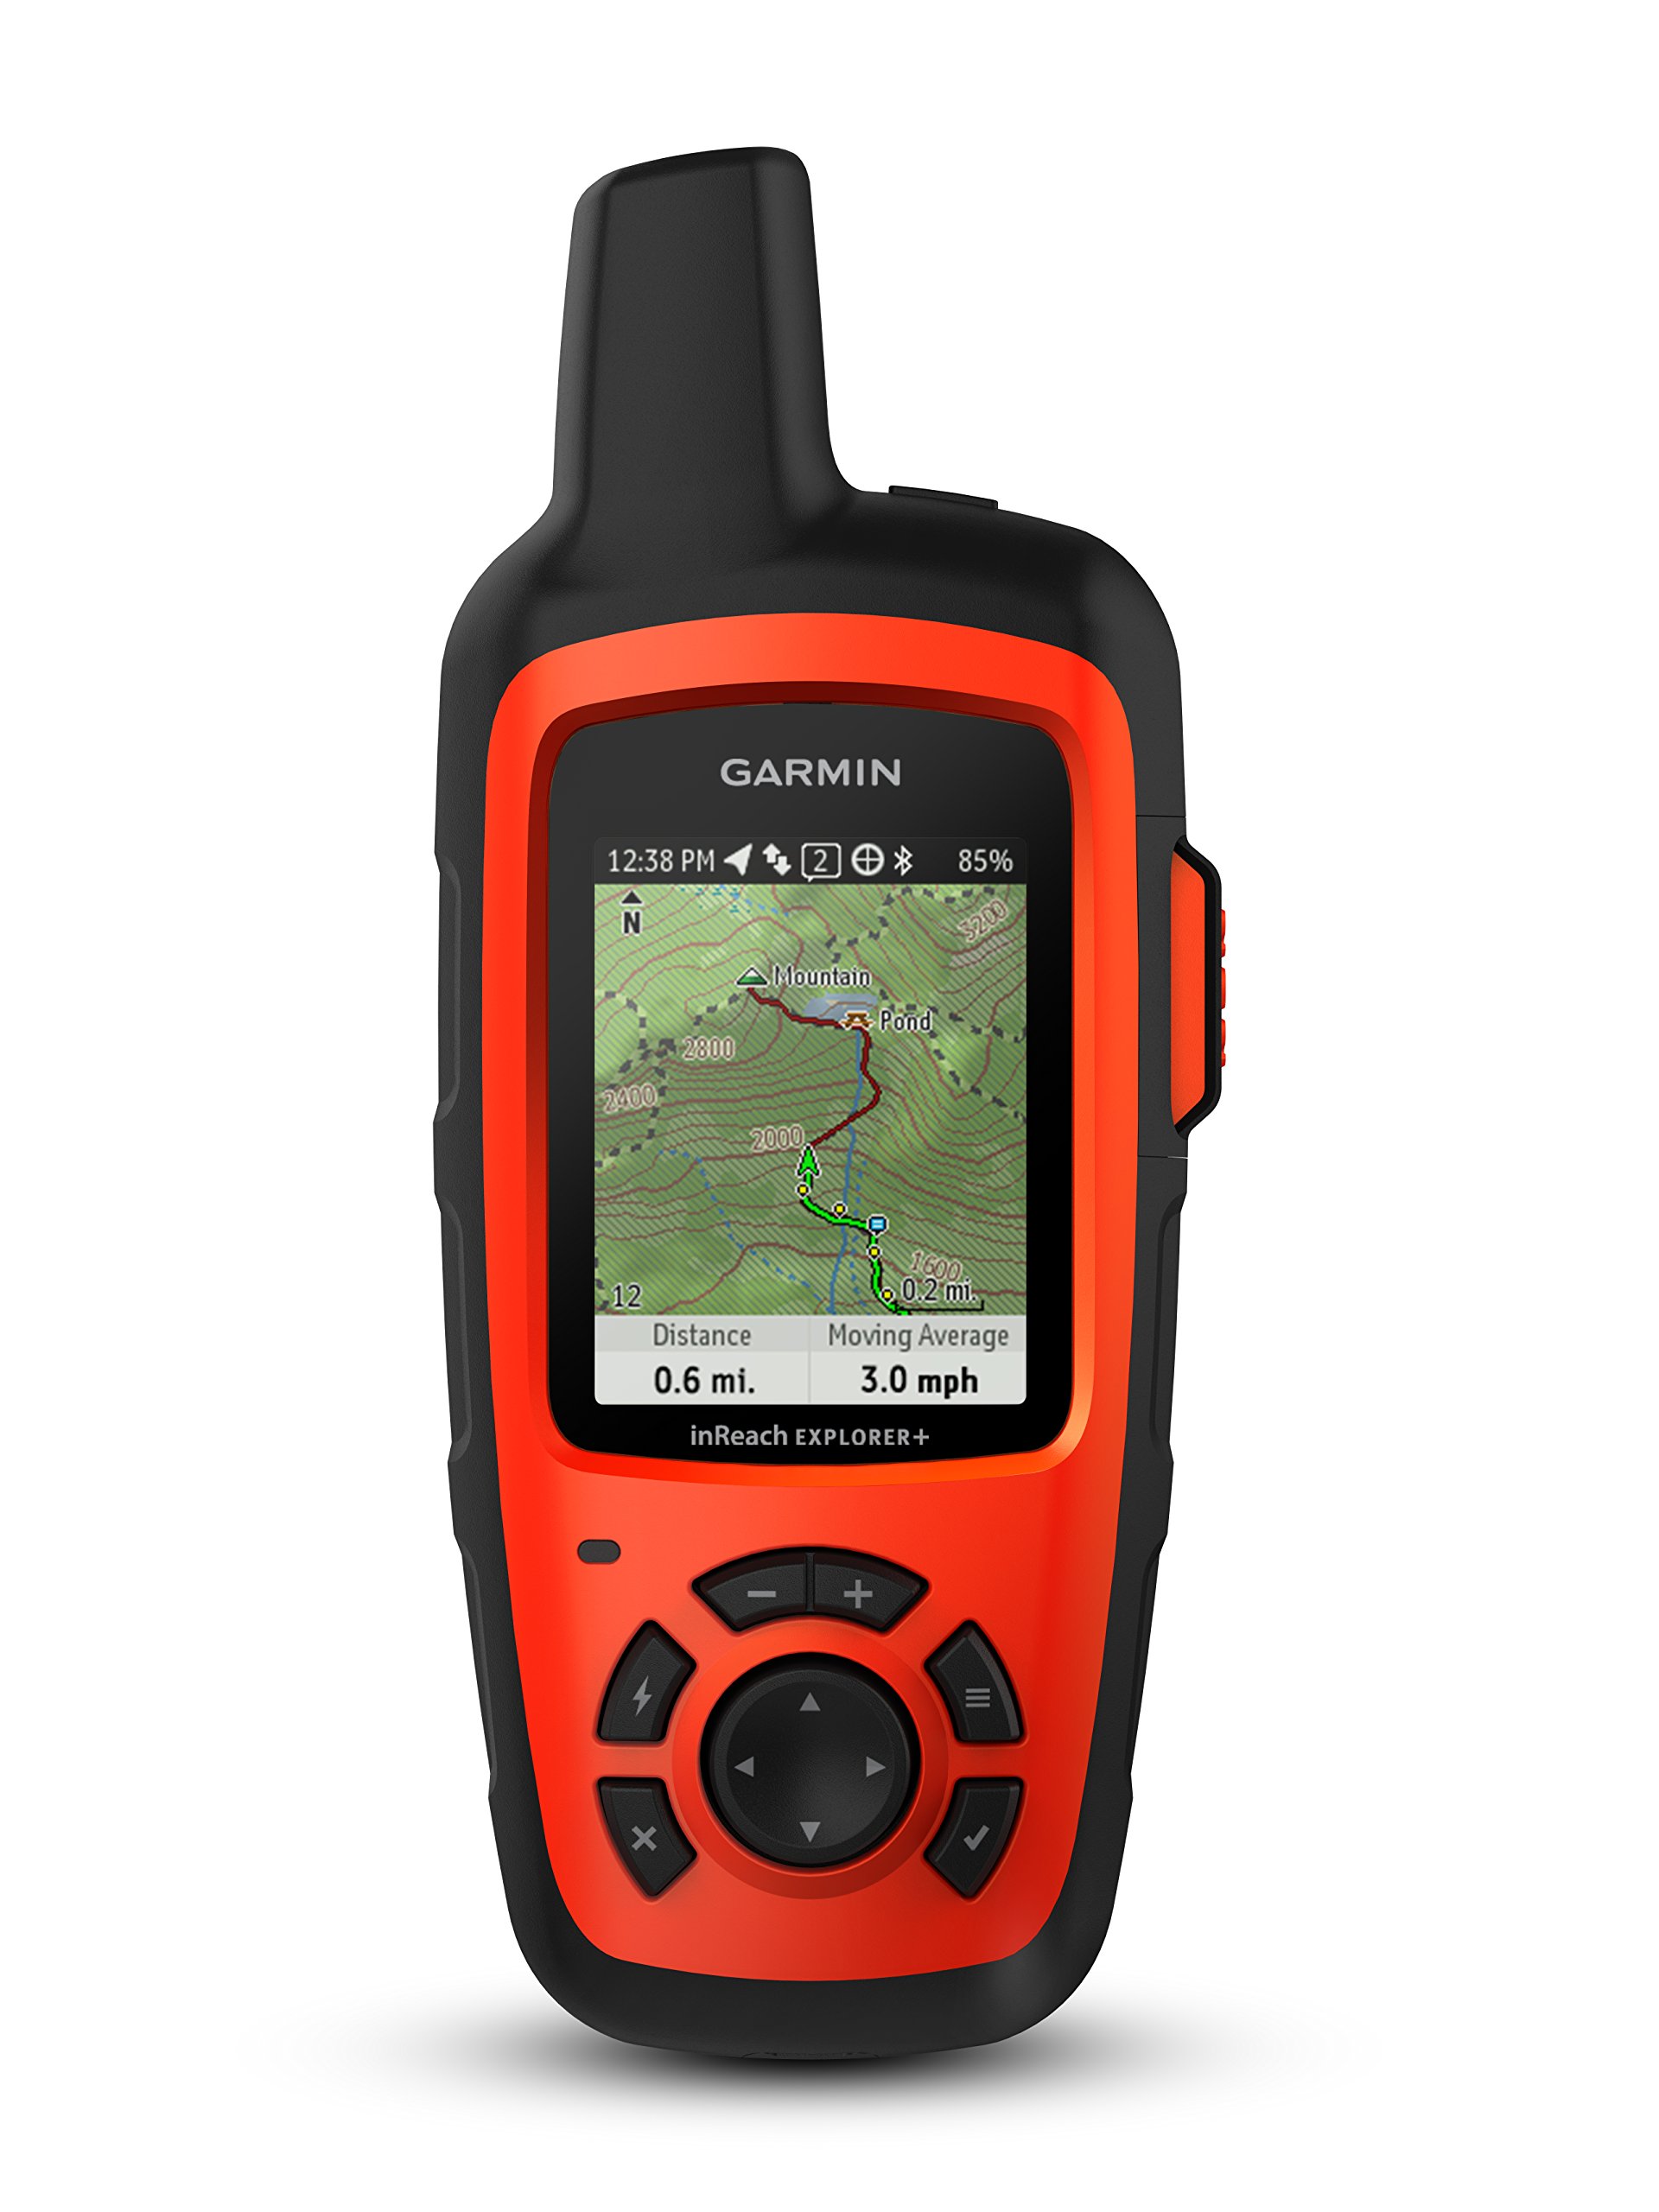 Garmin 010-01735-10 inReach Explorer+, Handheld Satellite Communicator with Topo Maps and GPS Navigation